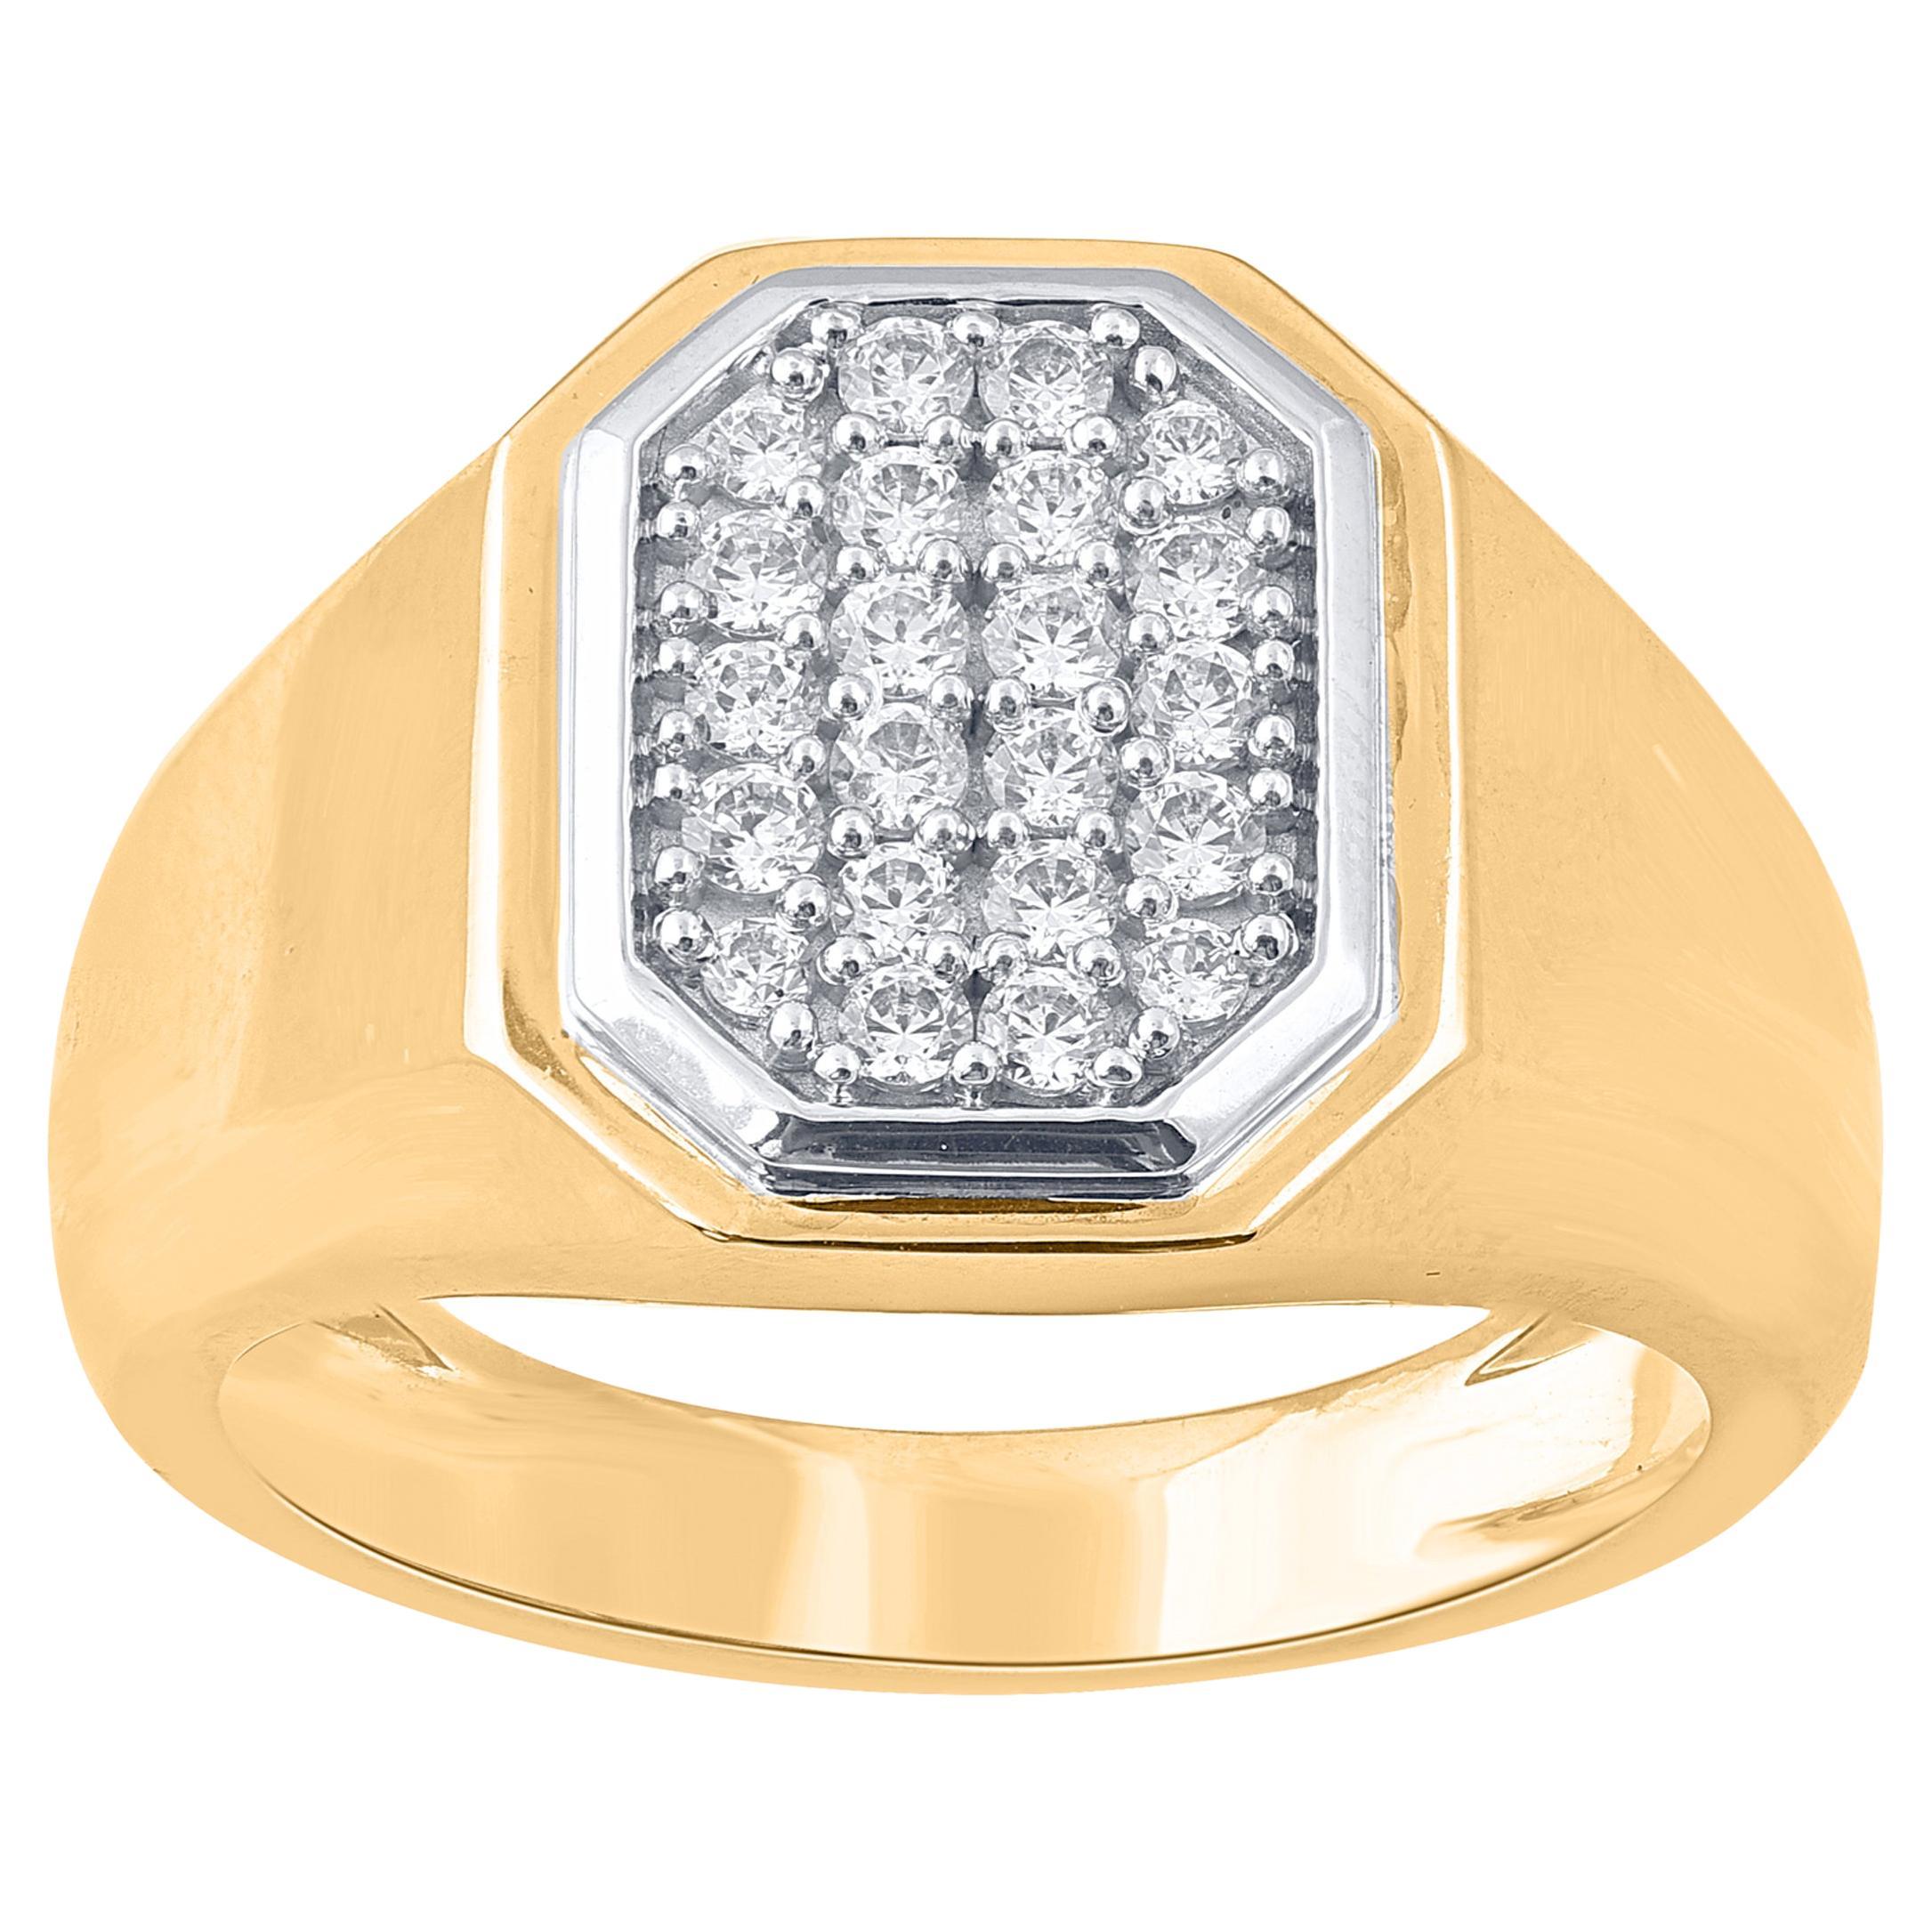 TJD 0.50 Carat Brilliant Cut Diamond 18 Karat Yellow Gold Men's Wedding Ring